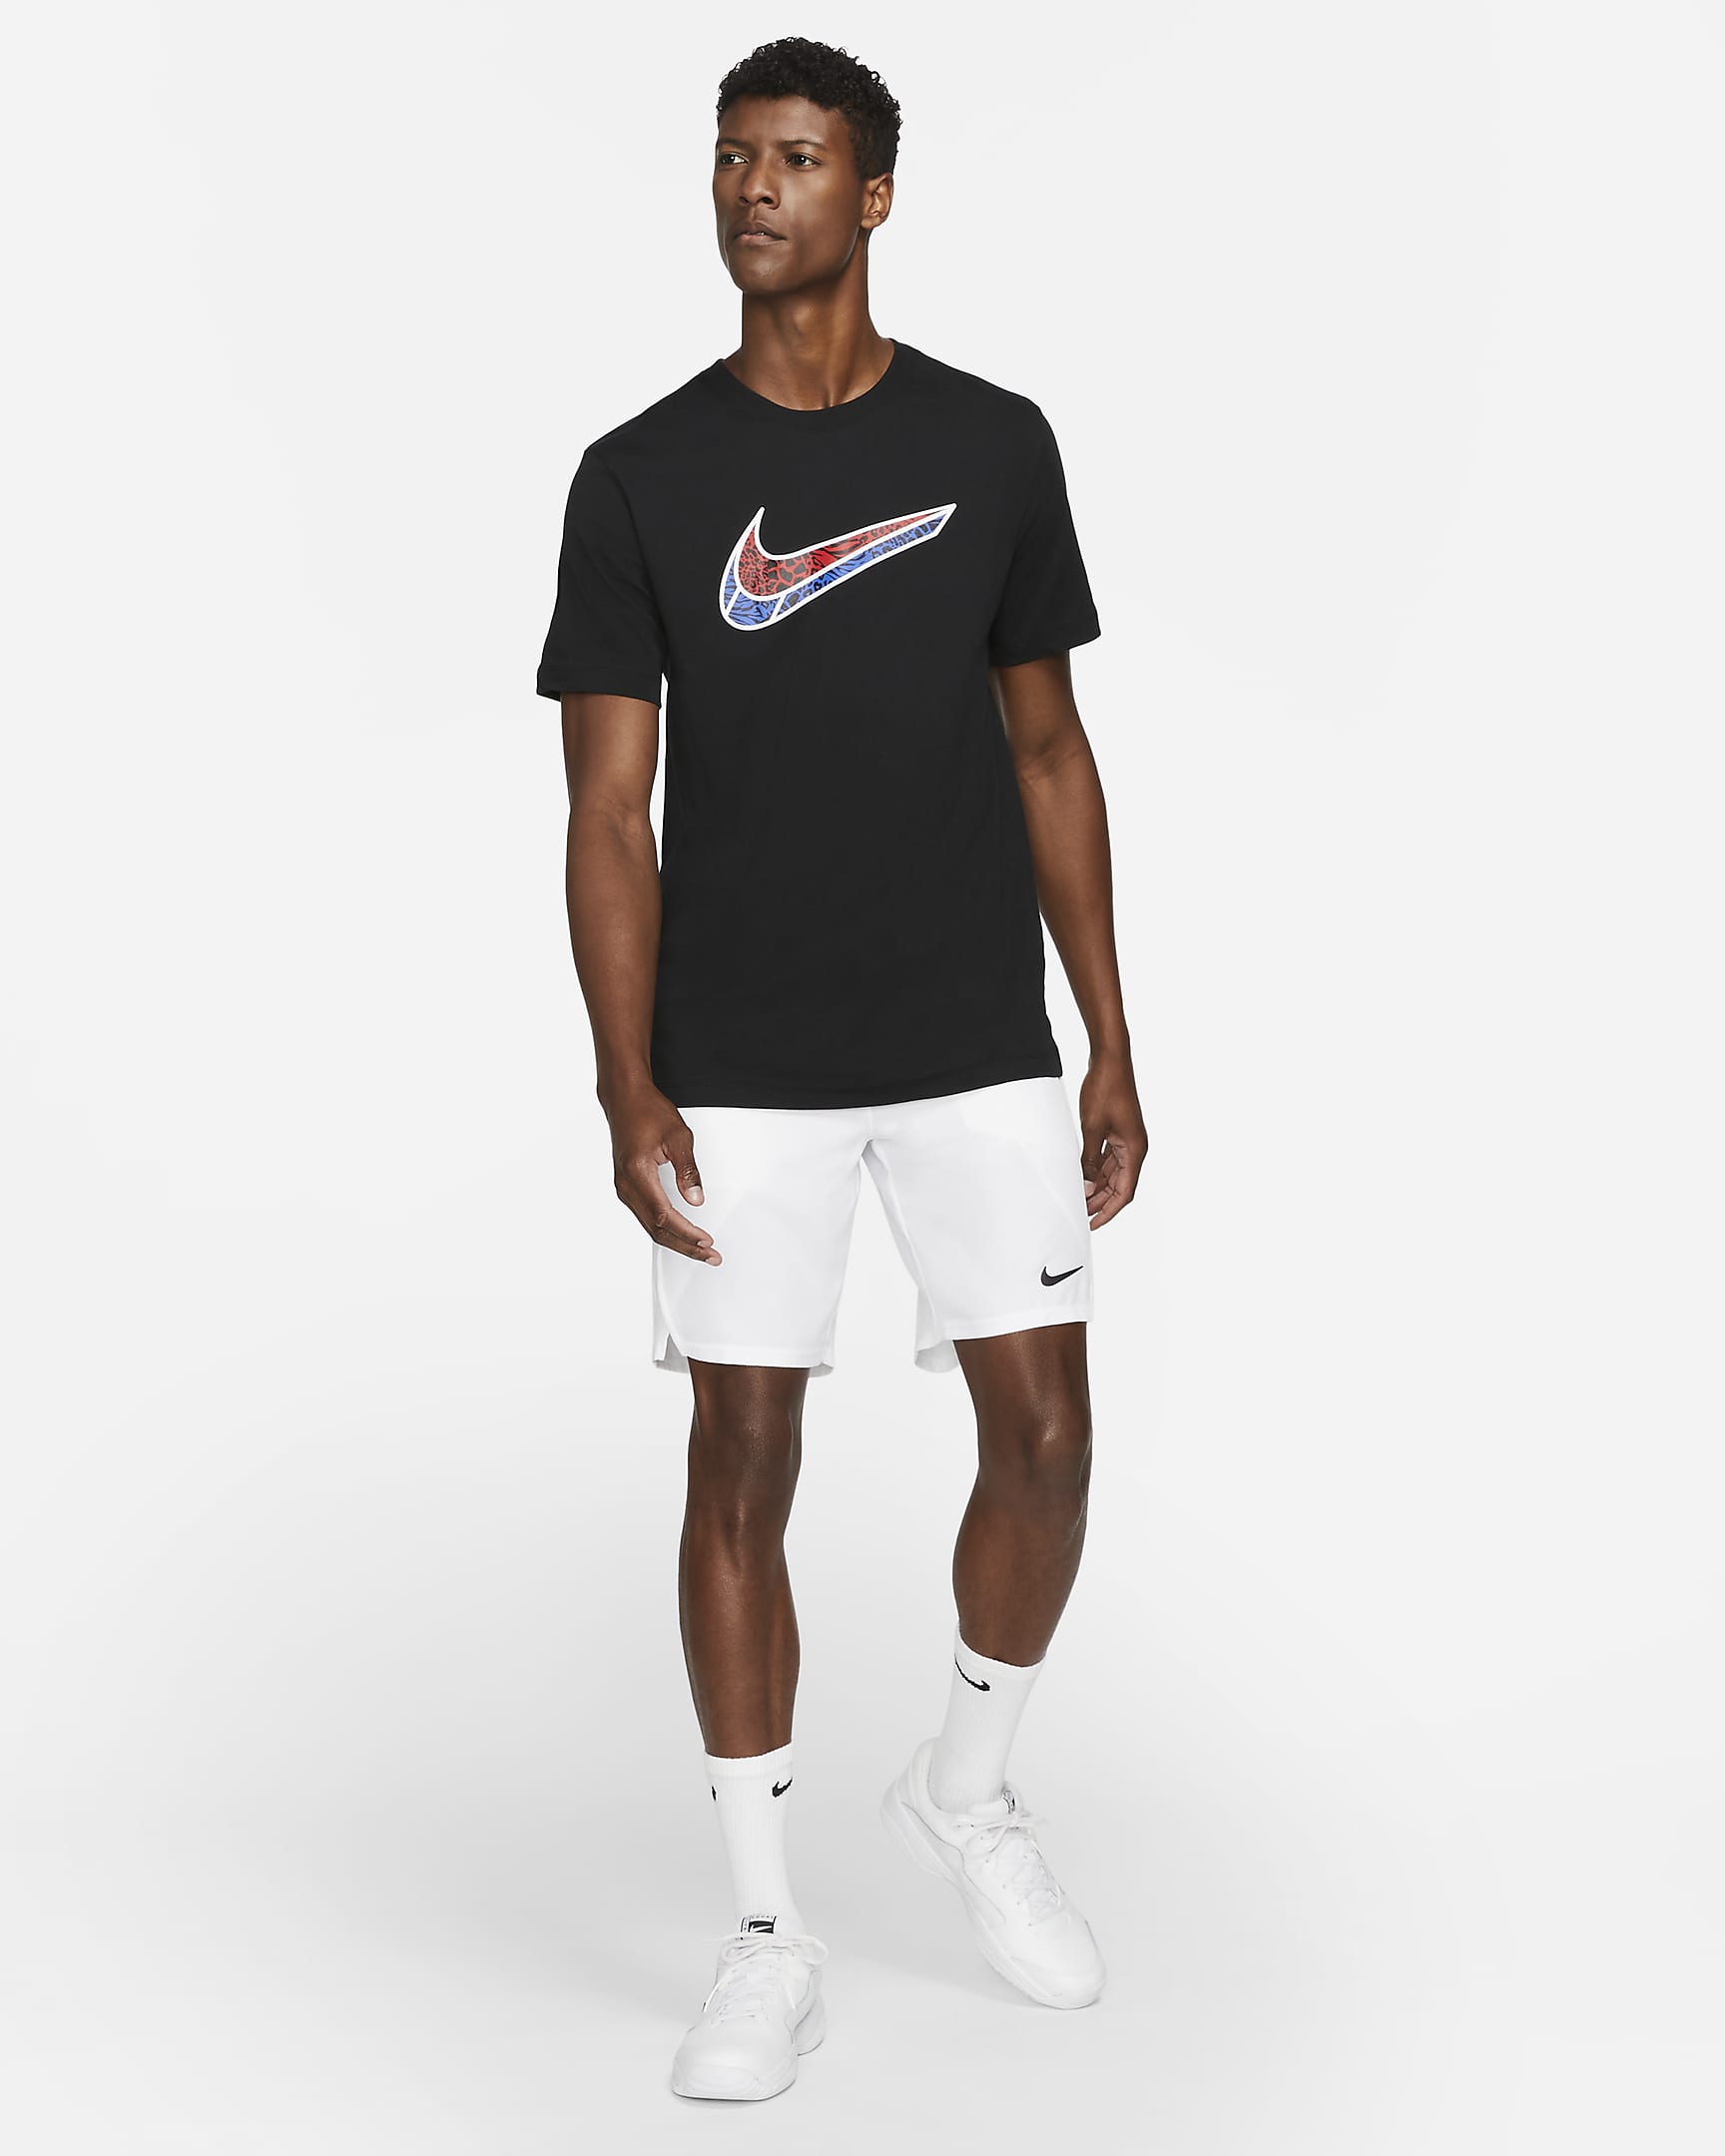 Nike Swoosh Men's Short-Sleeve T-Shirt. Nike HR